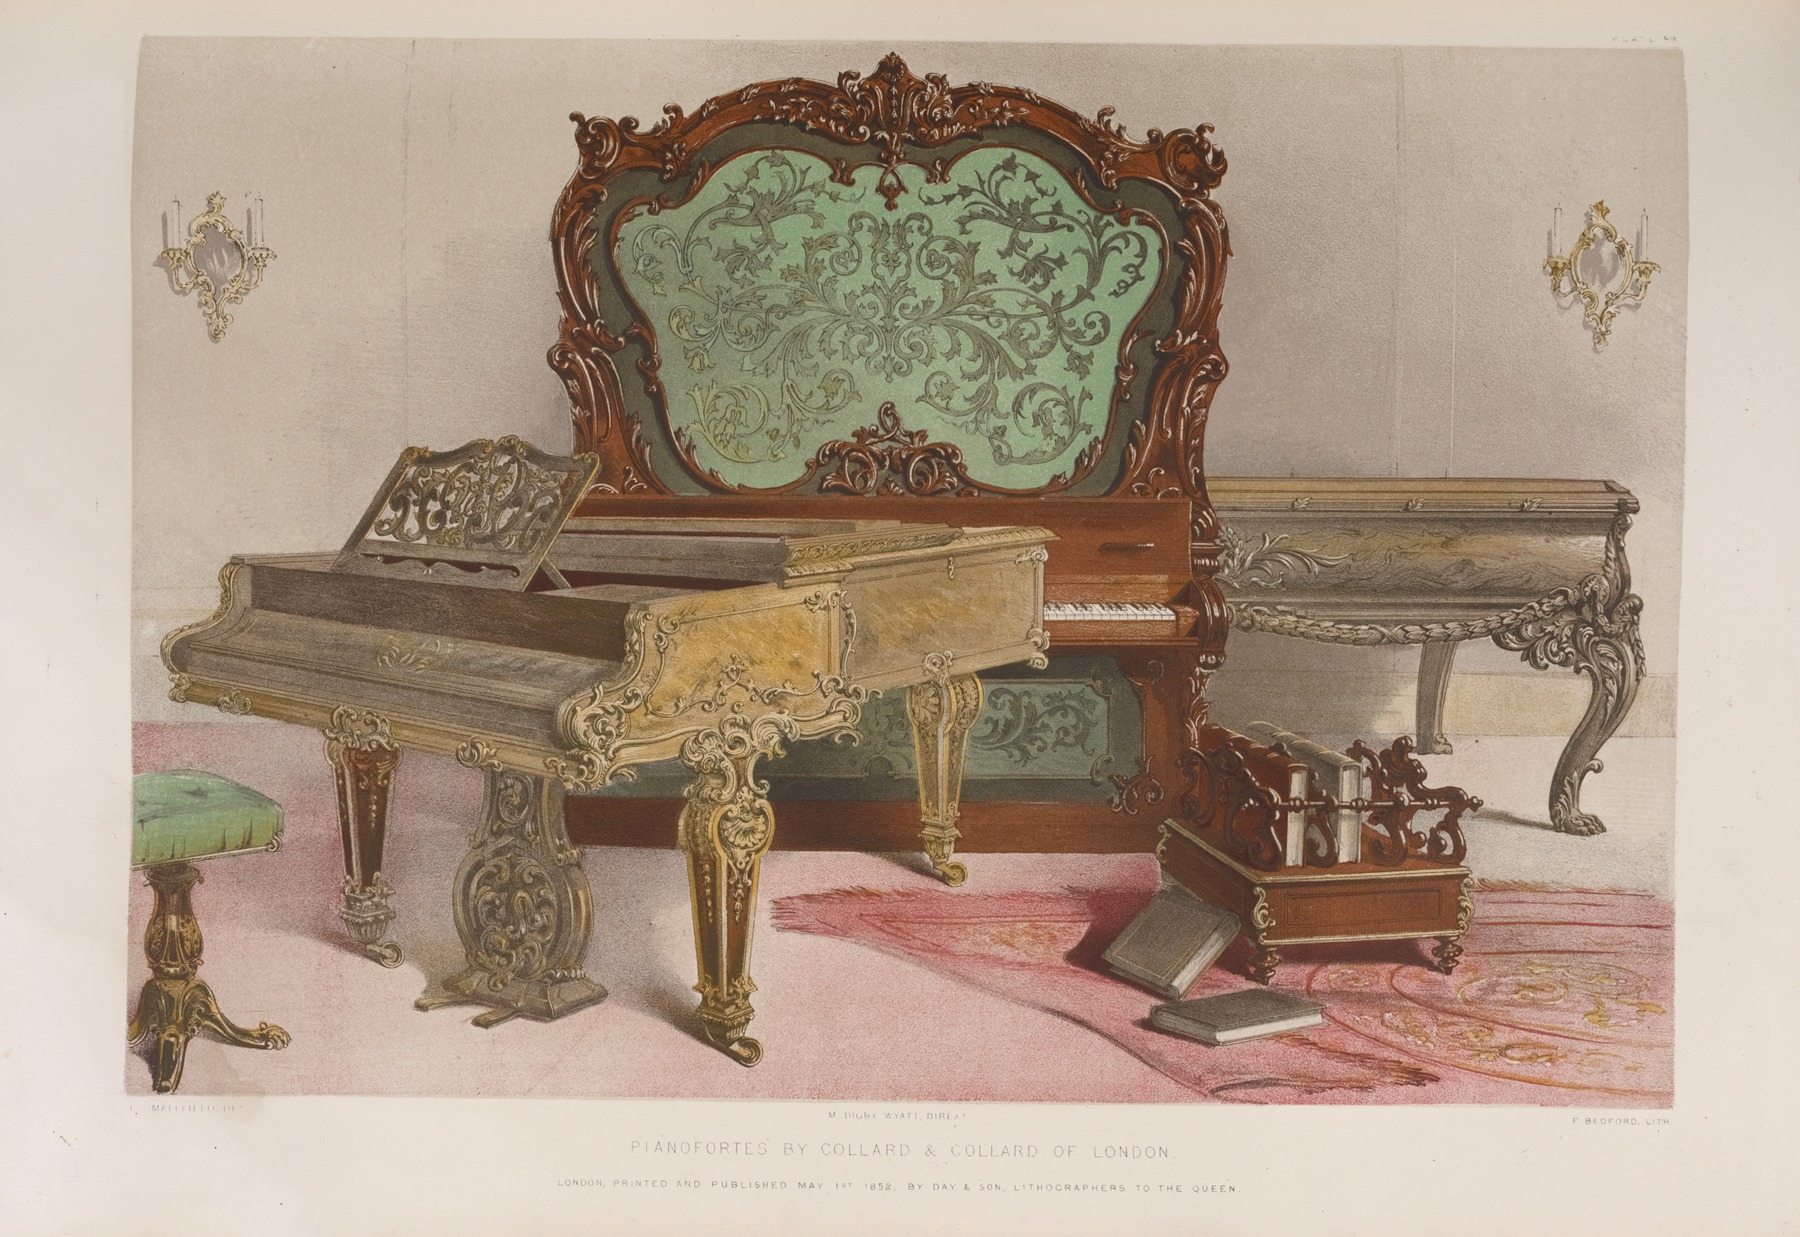 Matthew Digby Wyatt - Pianofortes by Collard & Collard of London